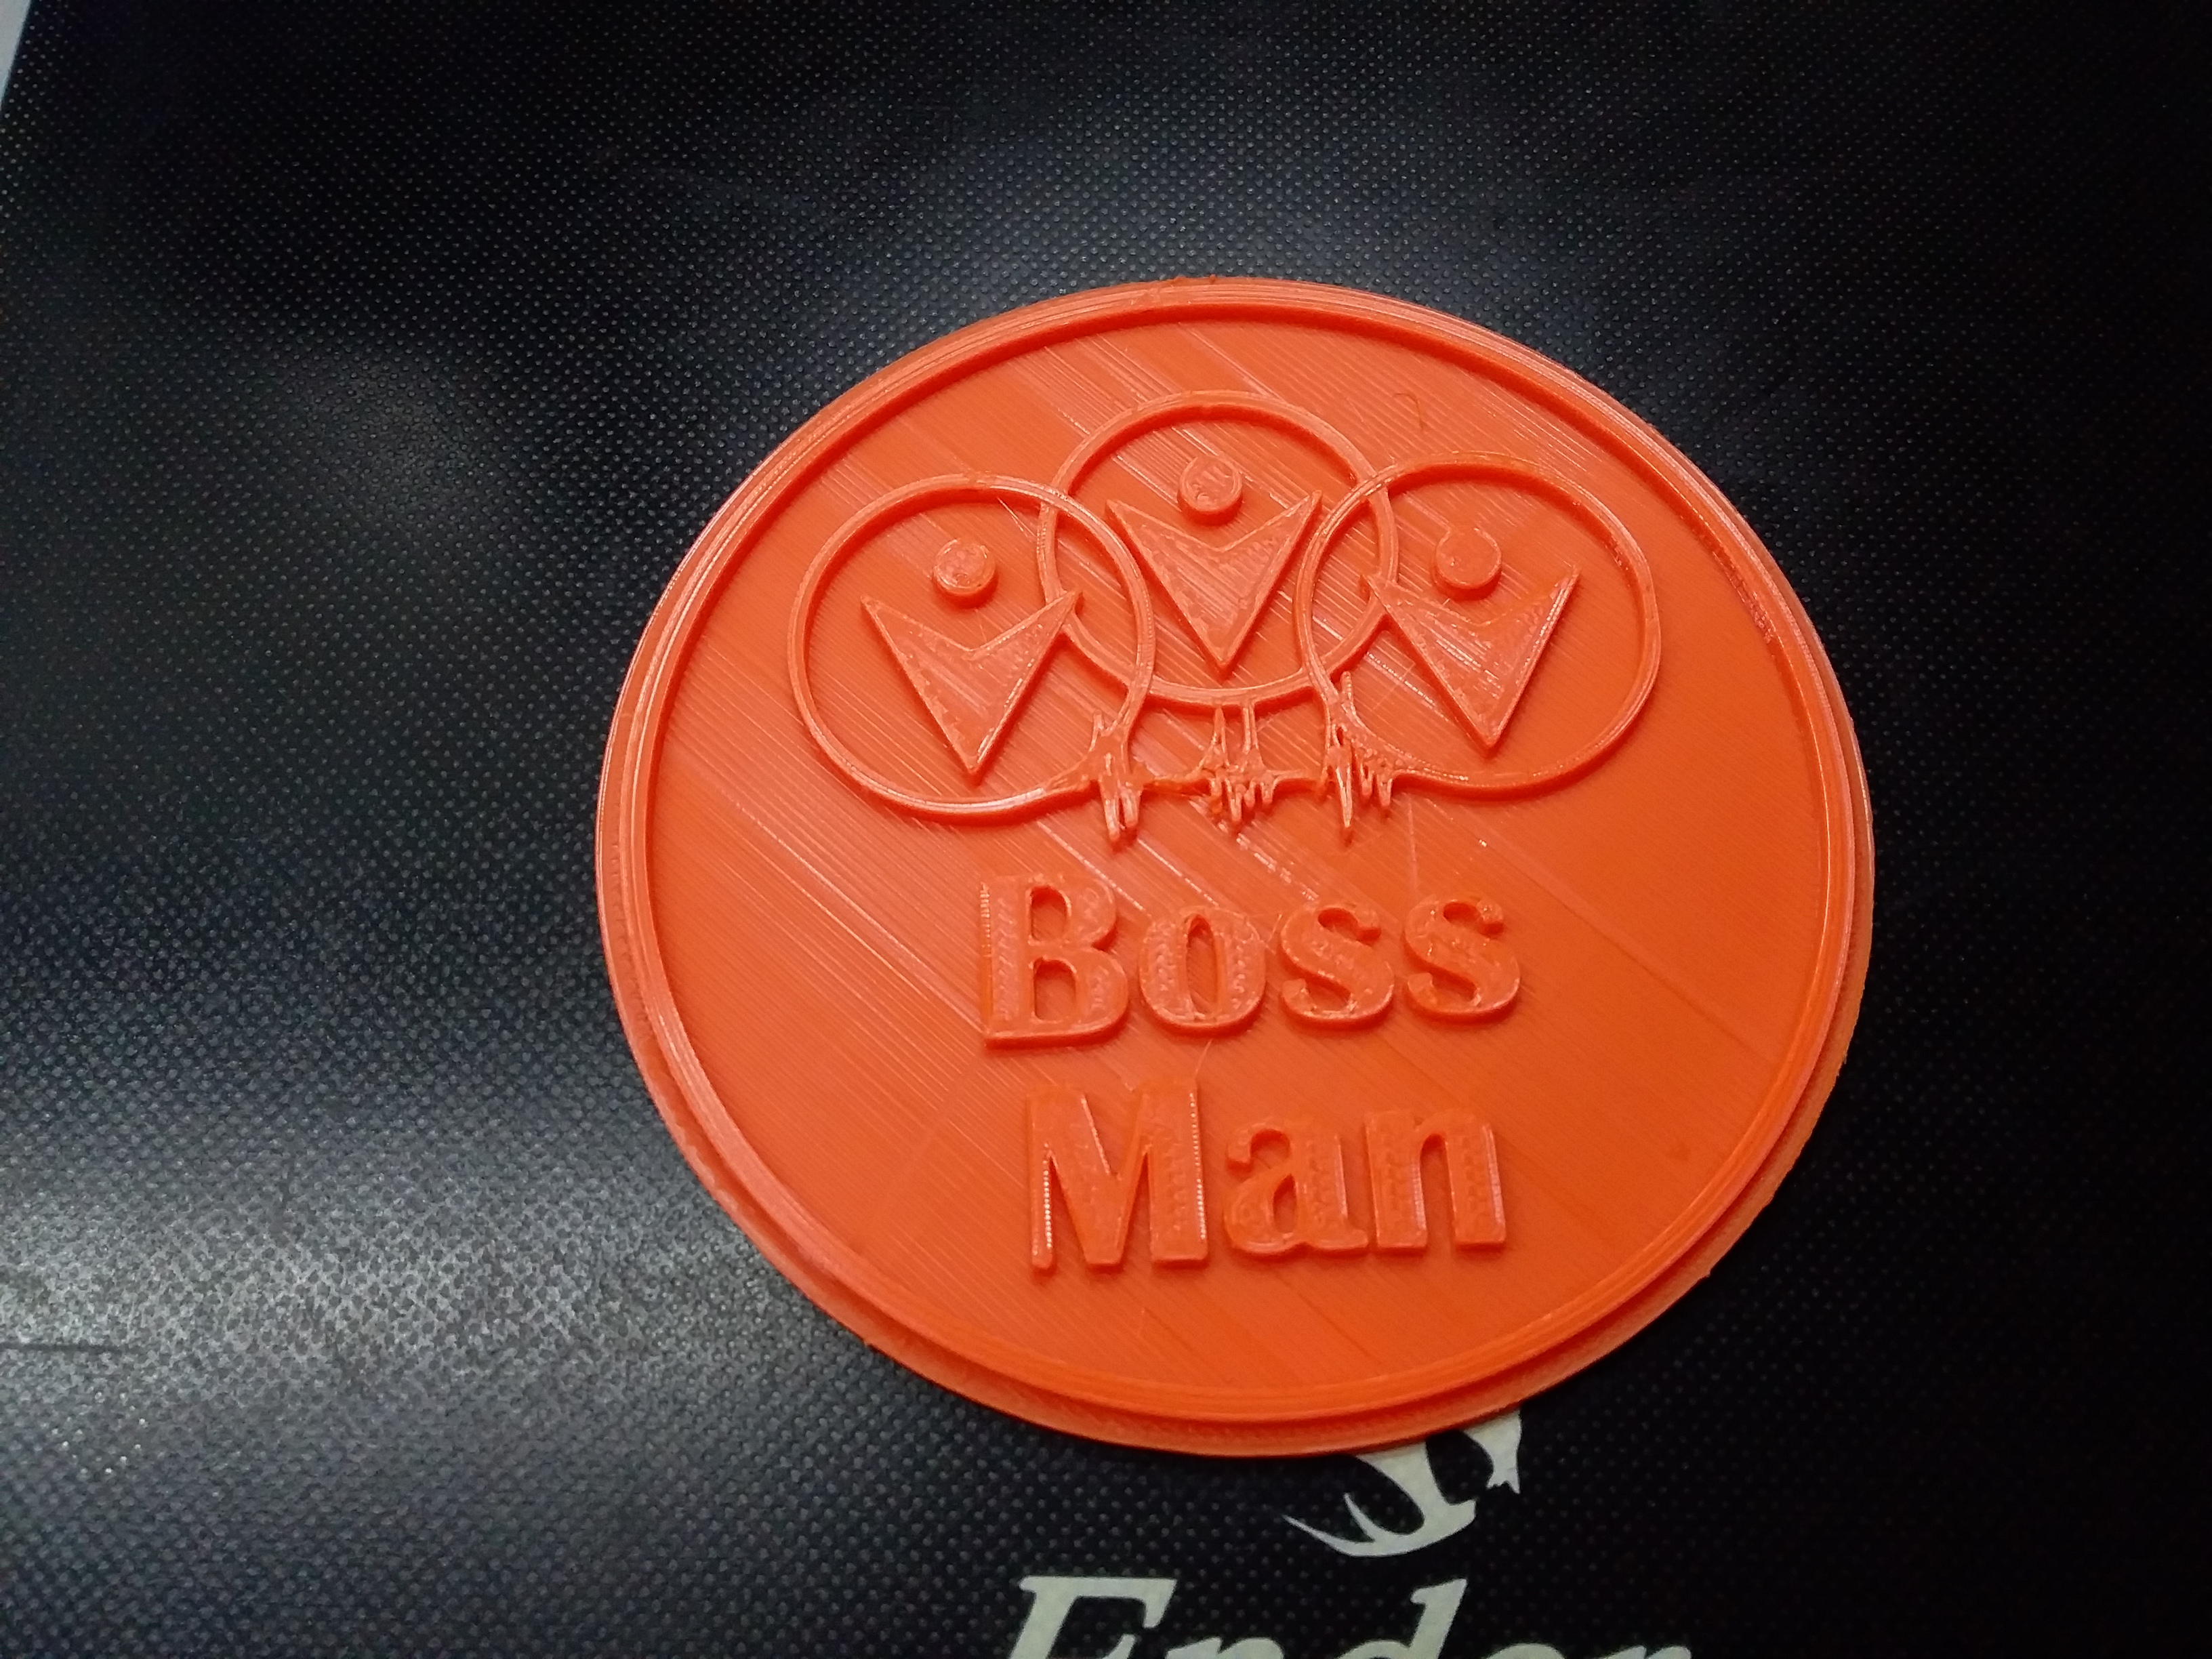 FHC Boss Man Coaster